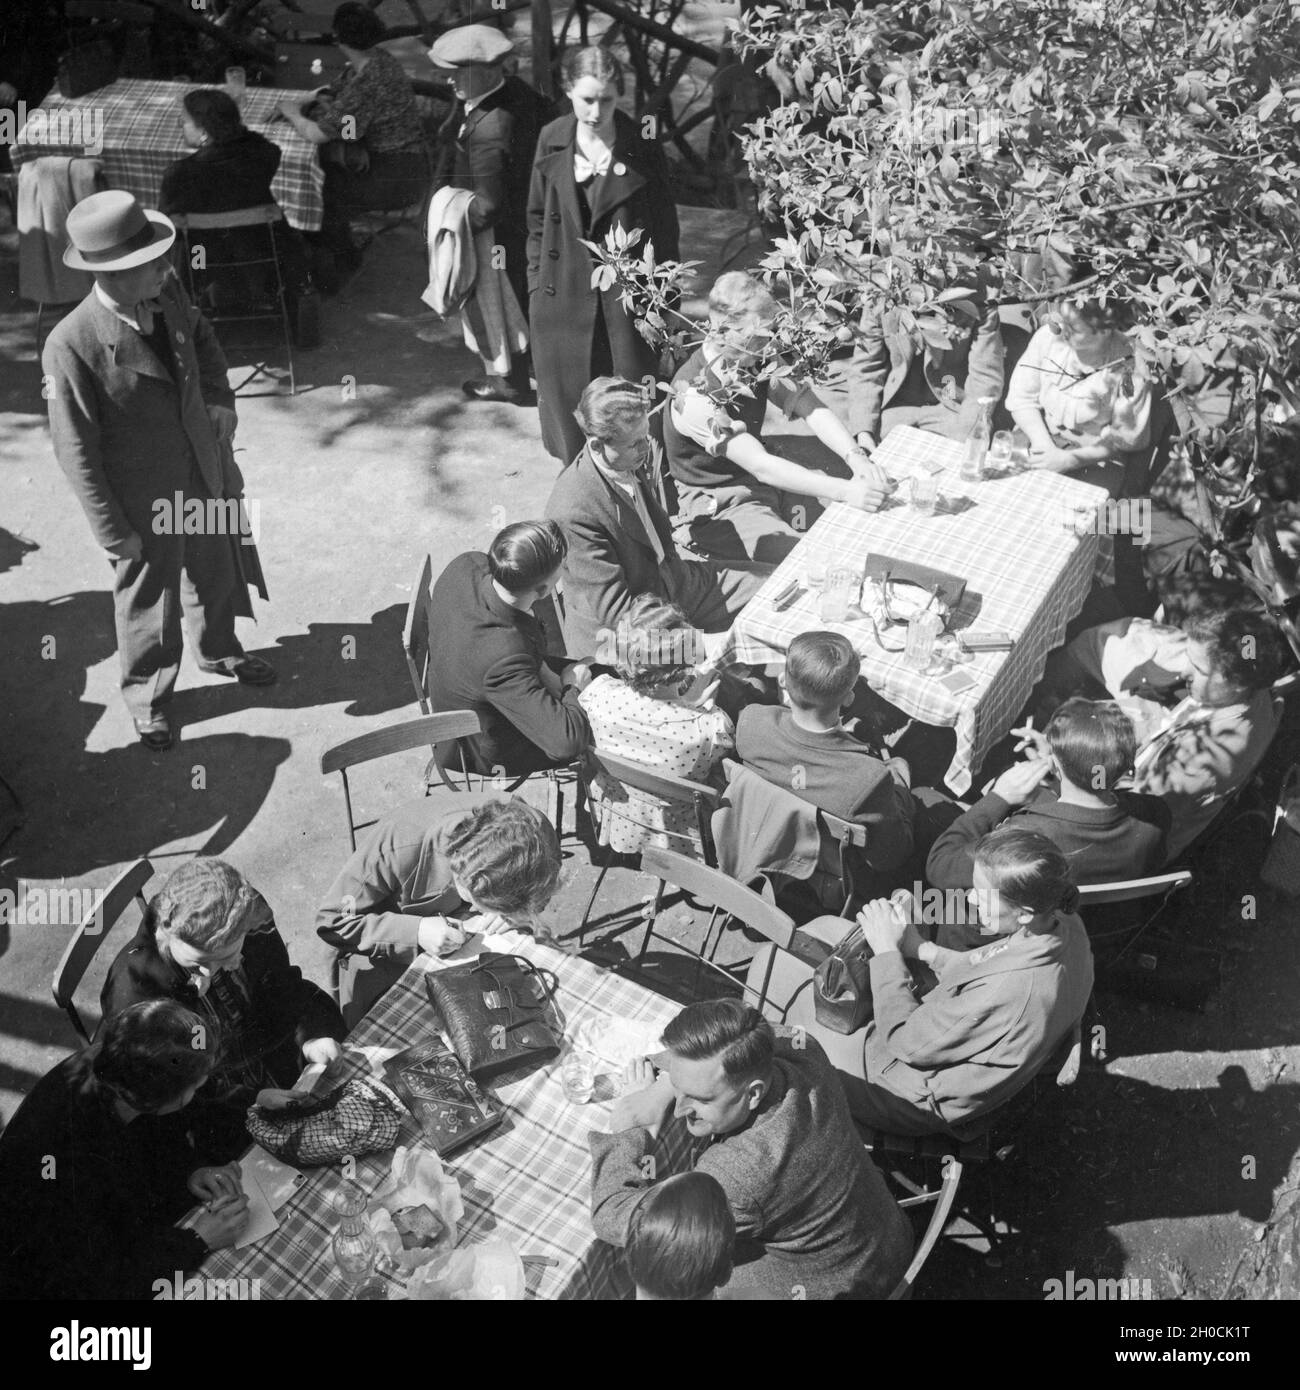 Menschen sitzen in einem Gartenrestaurant (ristorante nel giardino), Deutschland 1930er Jahre. La gente seduta in un ristorante con giardino, Germania 1930s. Foto Stock